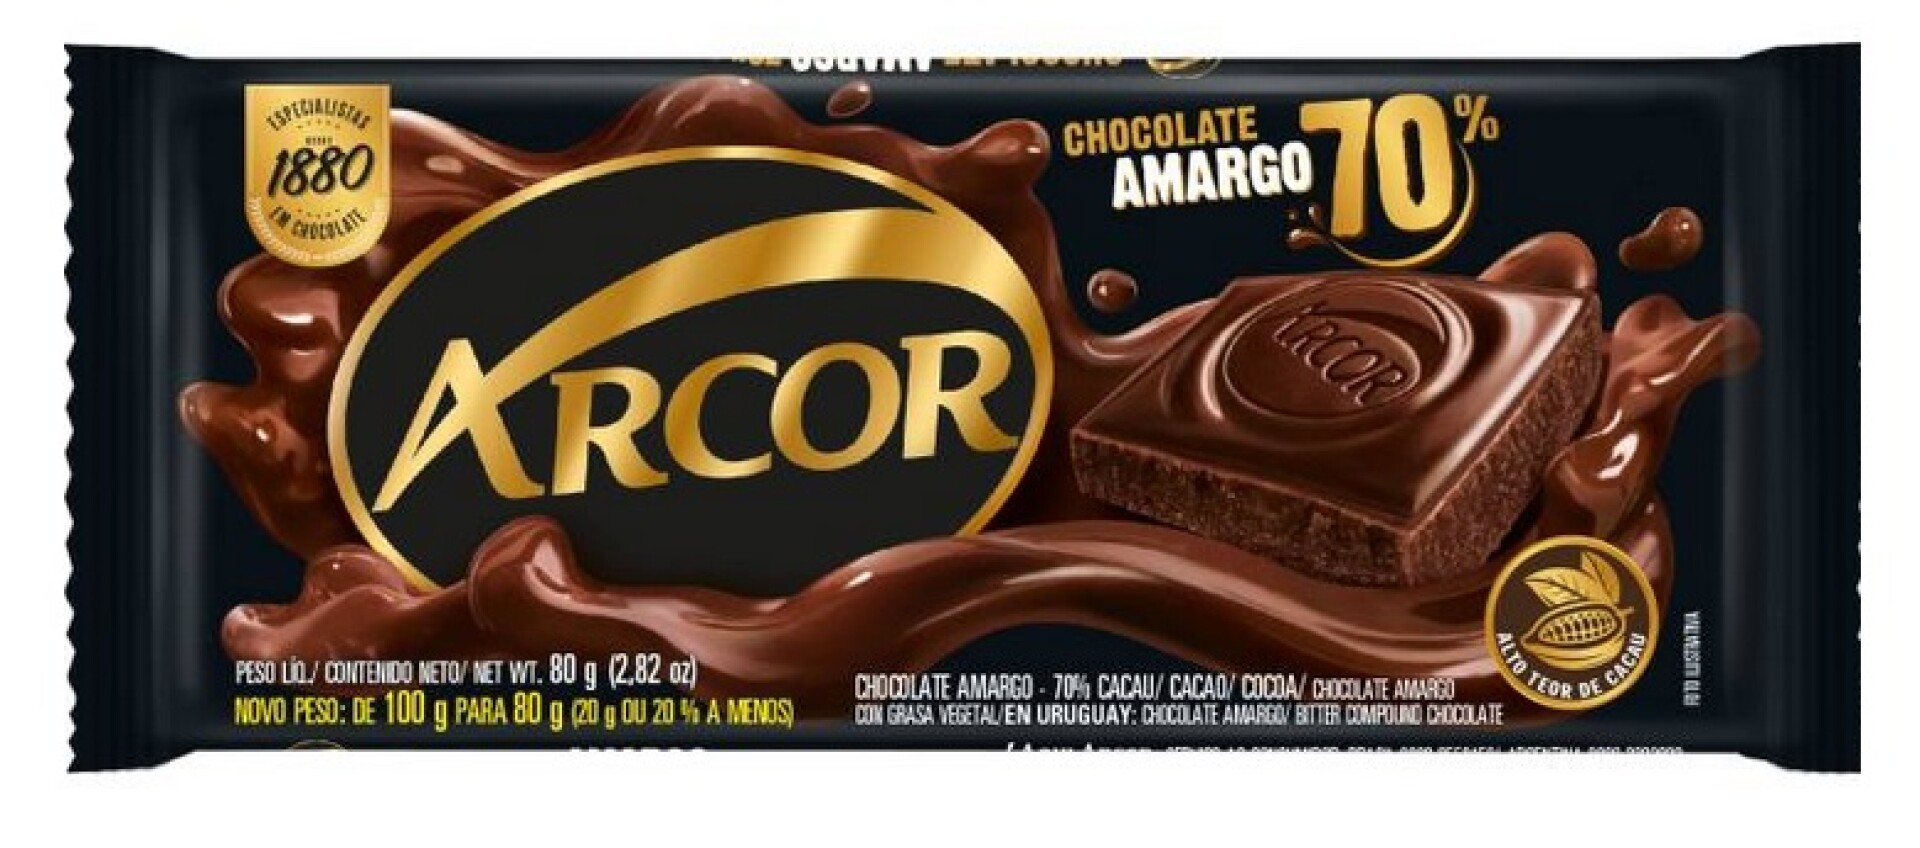 TABLETA CHOCOLATE ARCOR 80G AMARGO 70% 